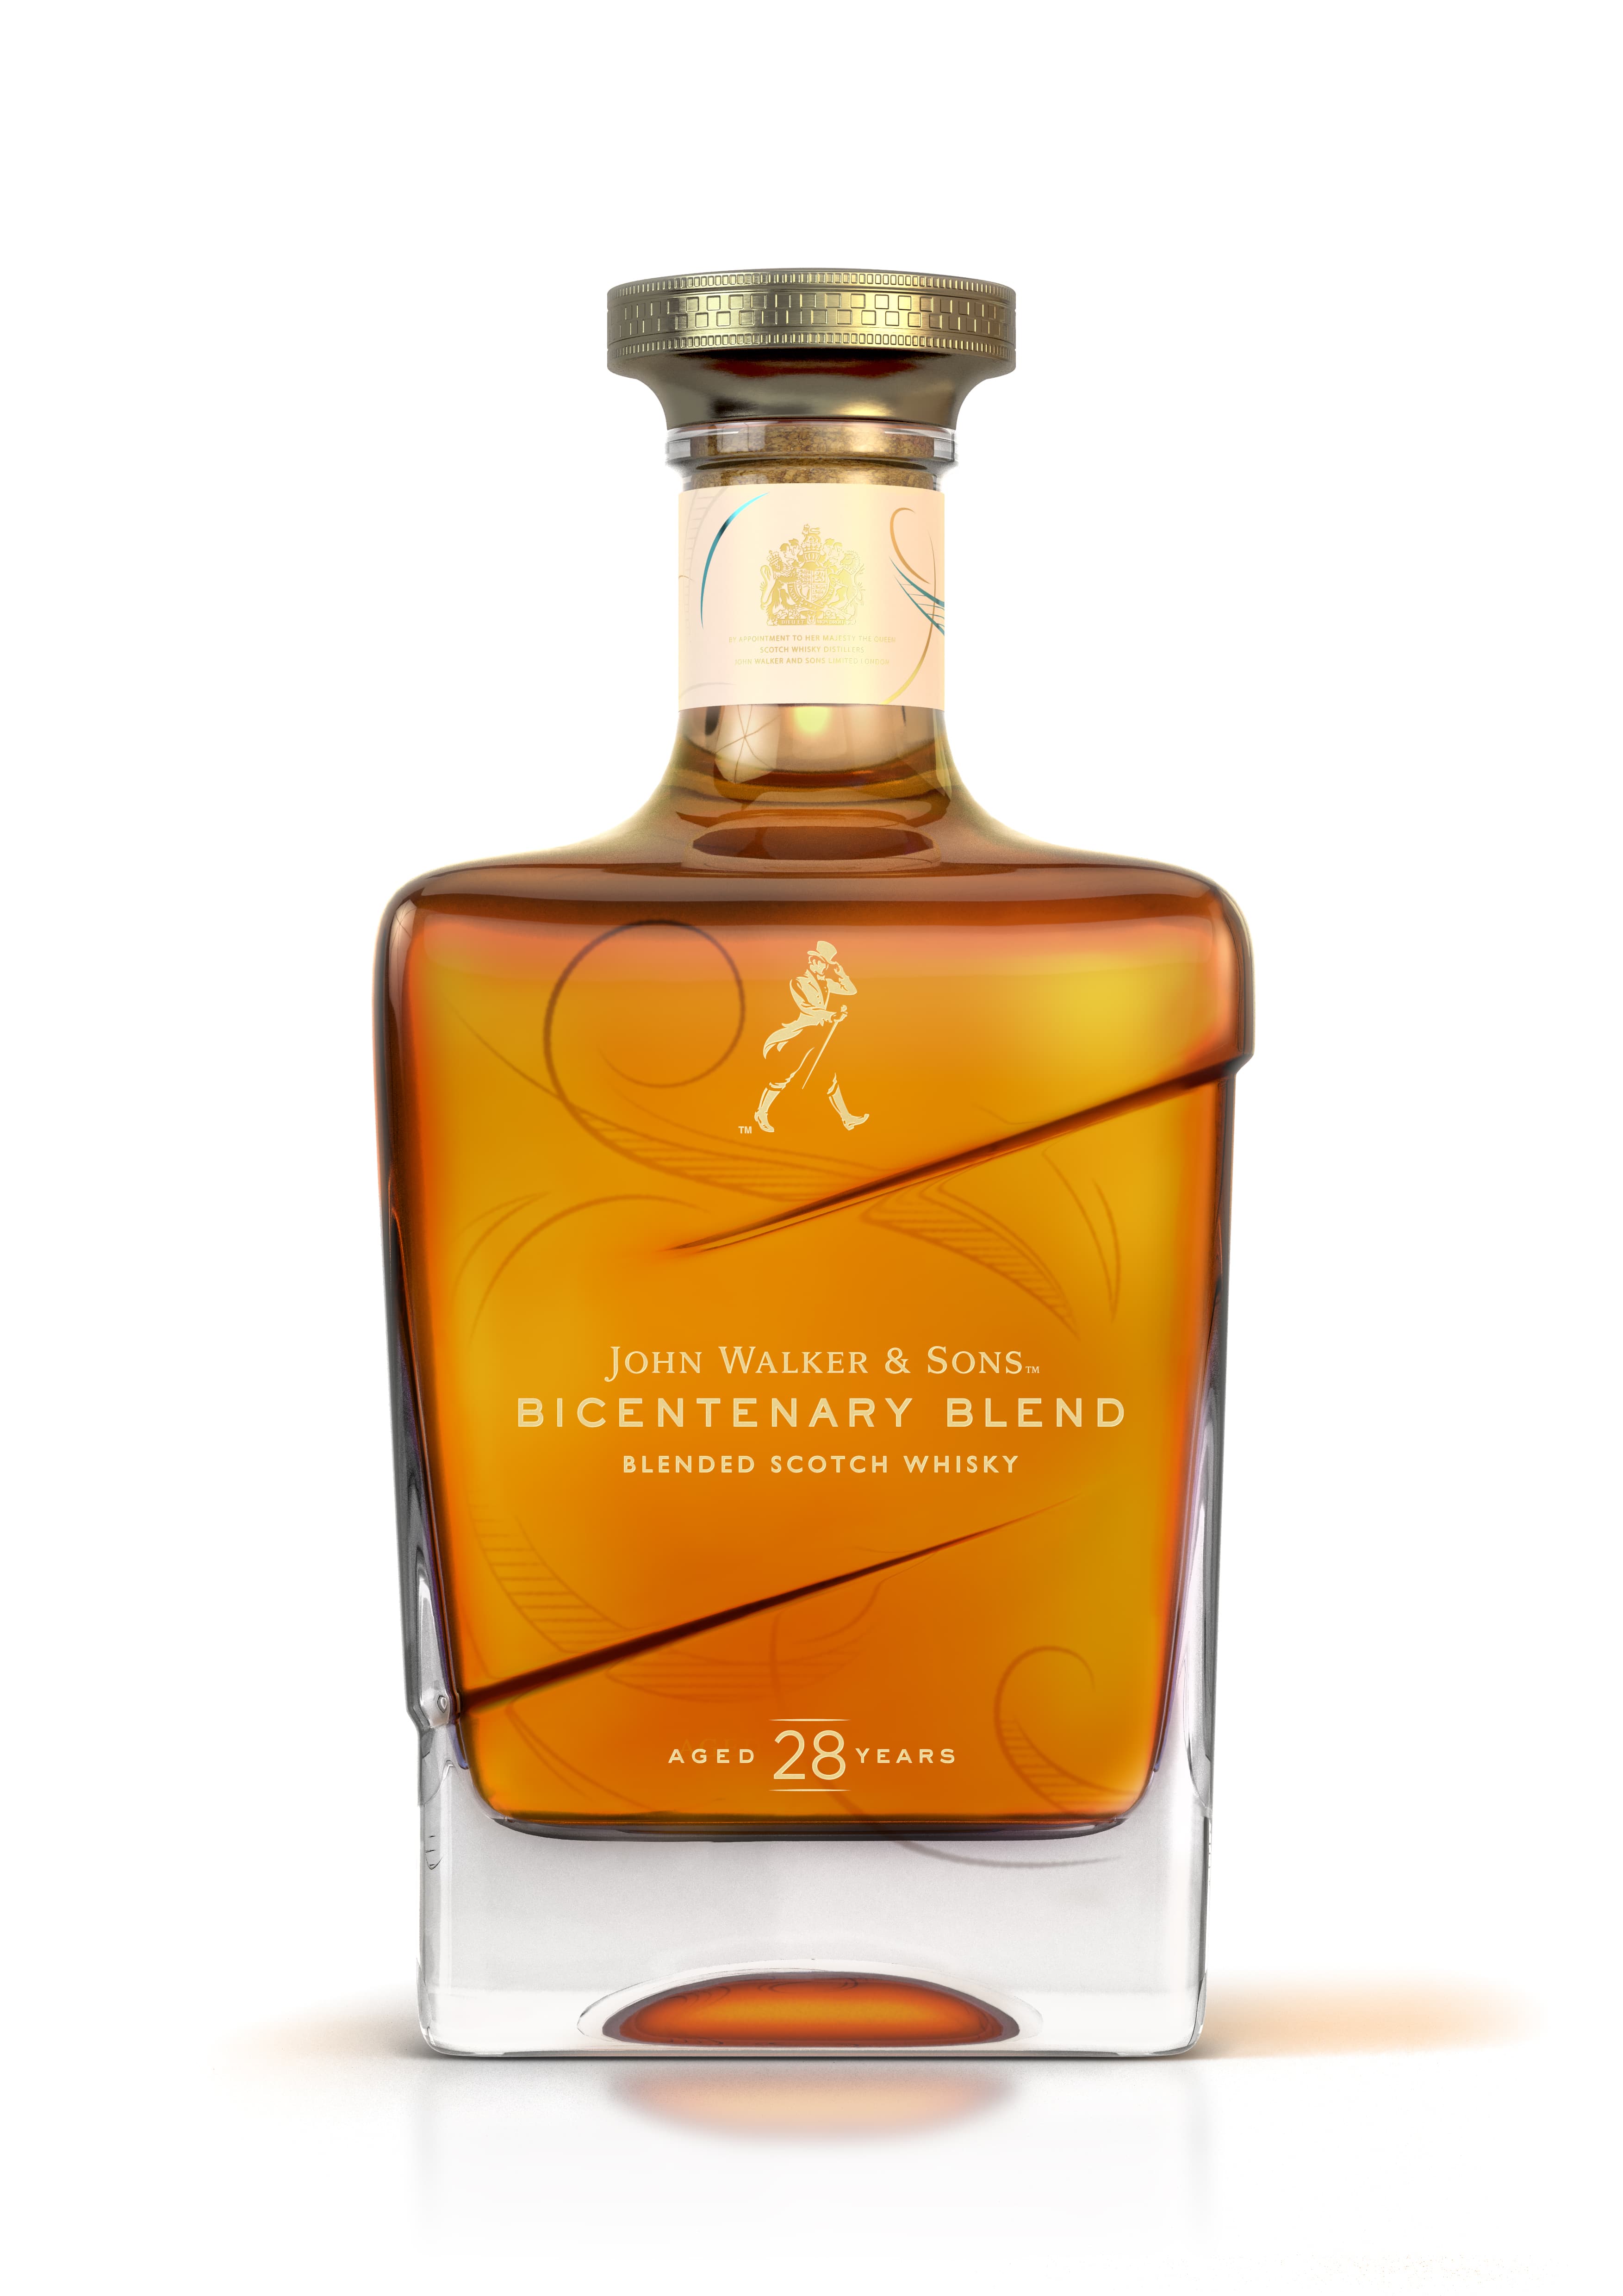 John Walker & Sons Bicentenary Blend 28 Year Old Blended Scotch Whisky Bottle